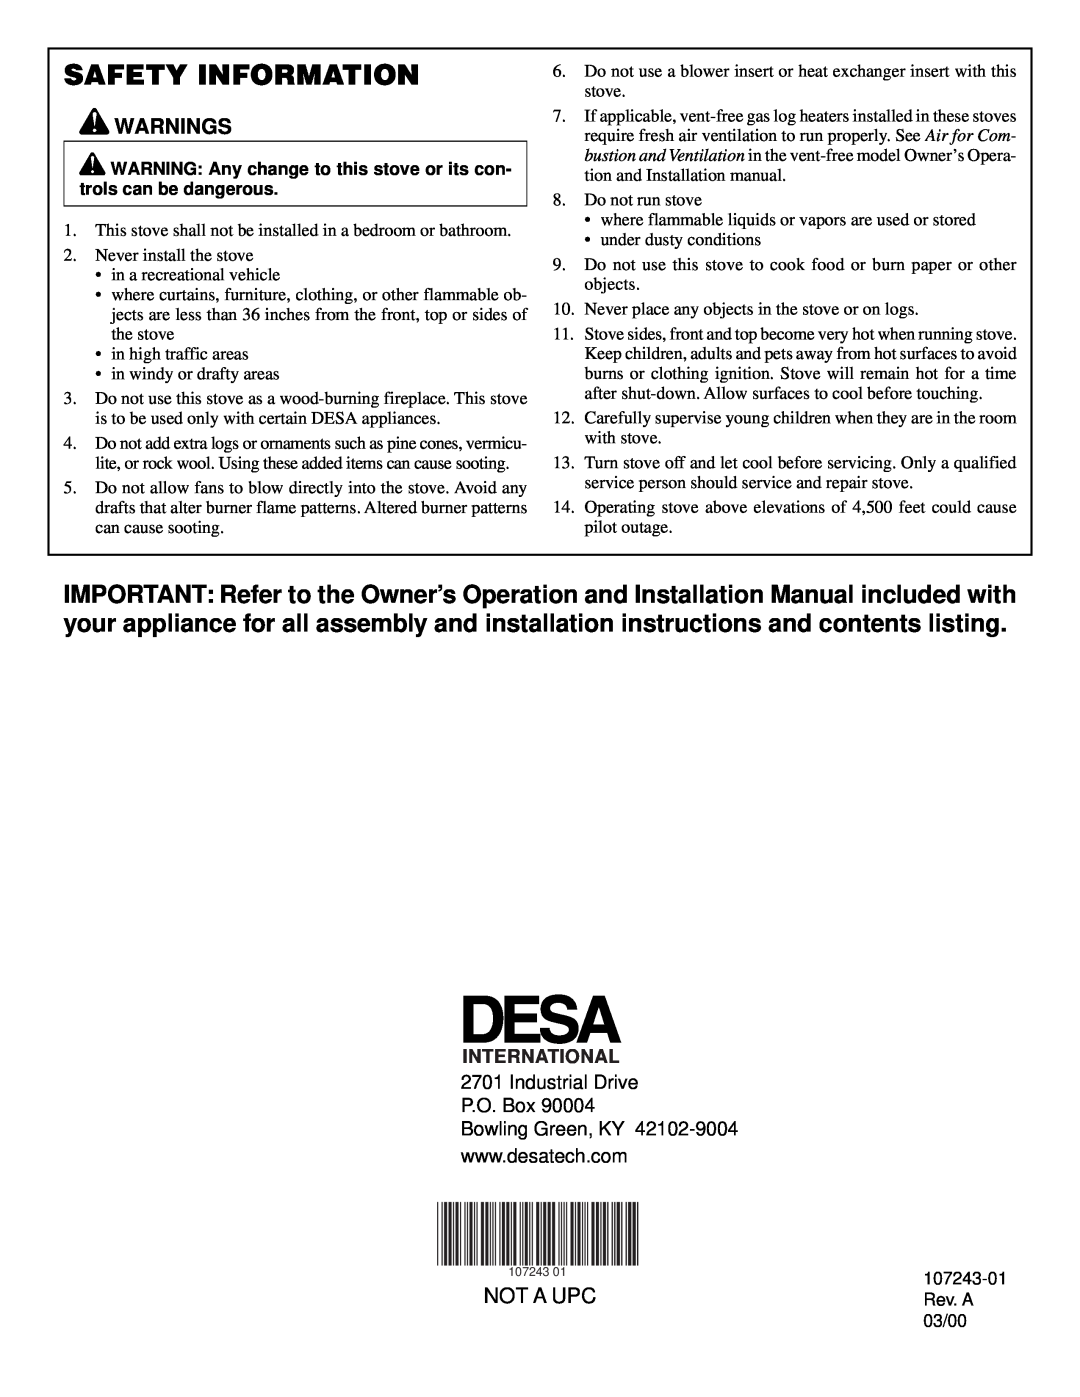 Desa CISCB manual Safety Information, Not A Upc, Industrial Drive P.O. Box, International 